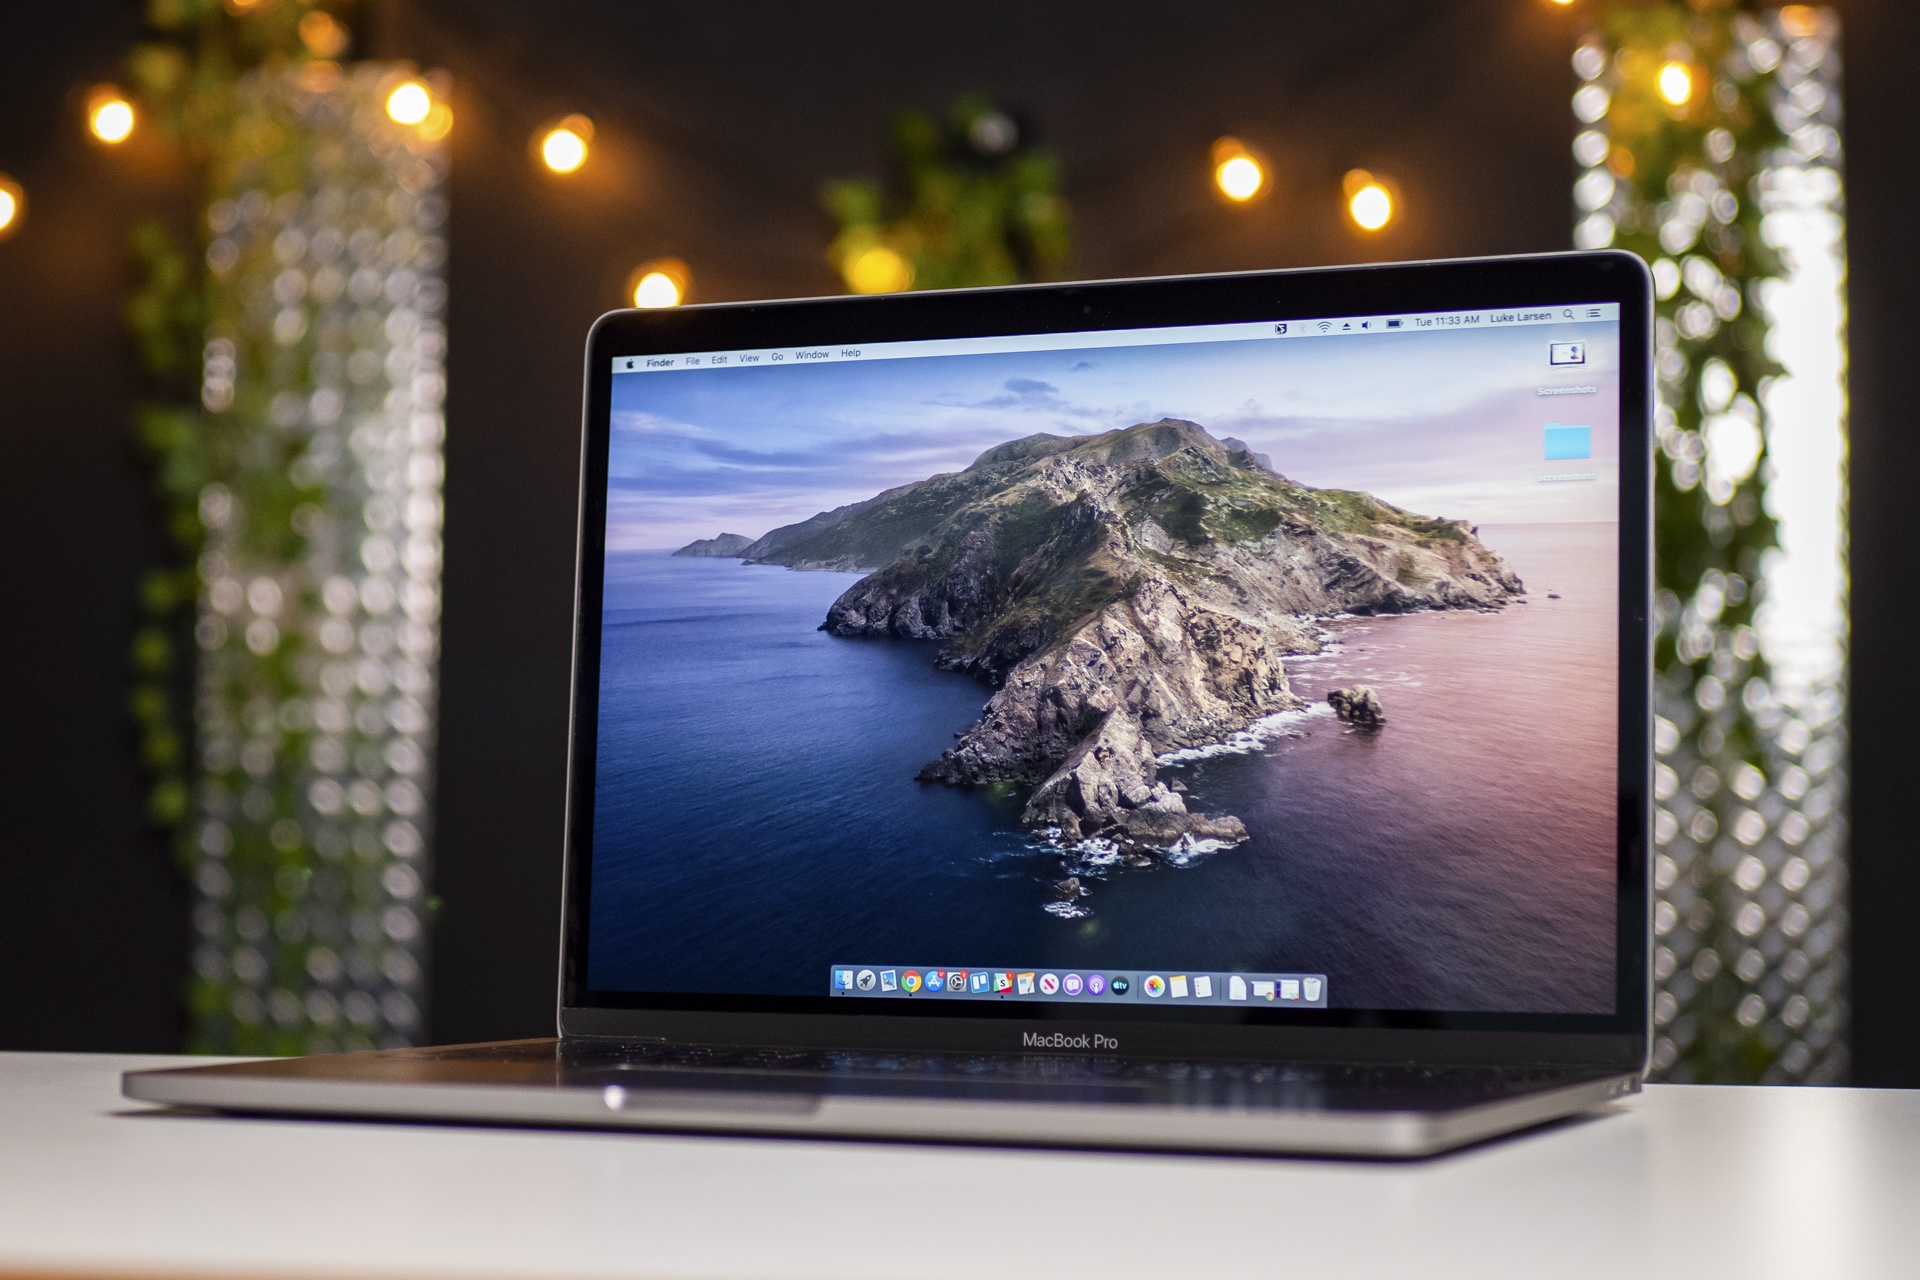 MacBook Pro 13 Retina Début 2015 - Intel i5 2,7 Ghz - 16 Go RAM